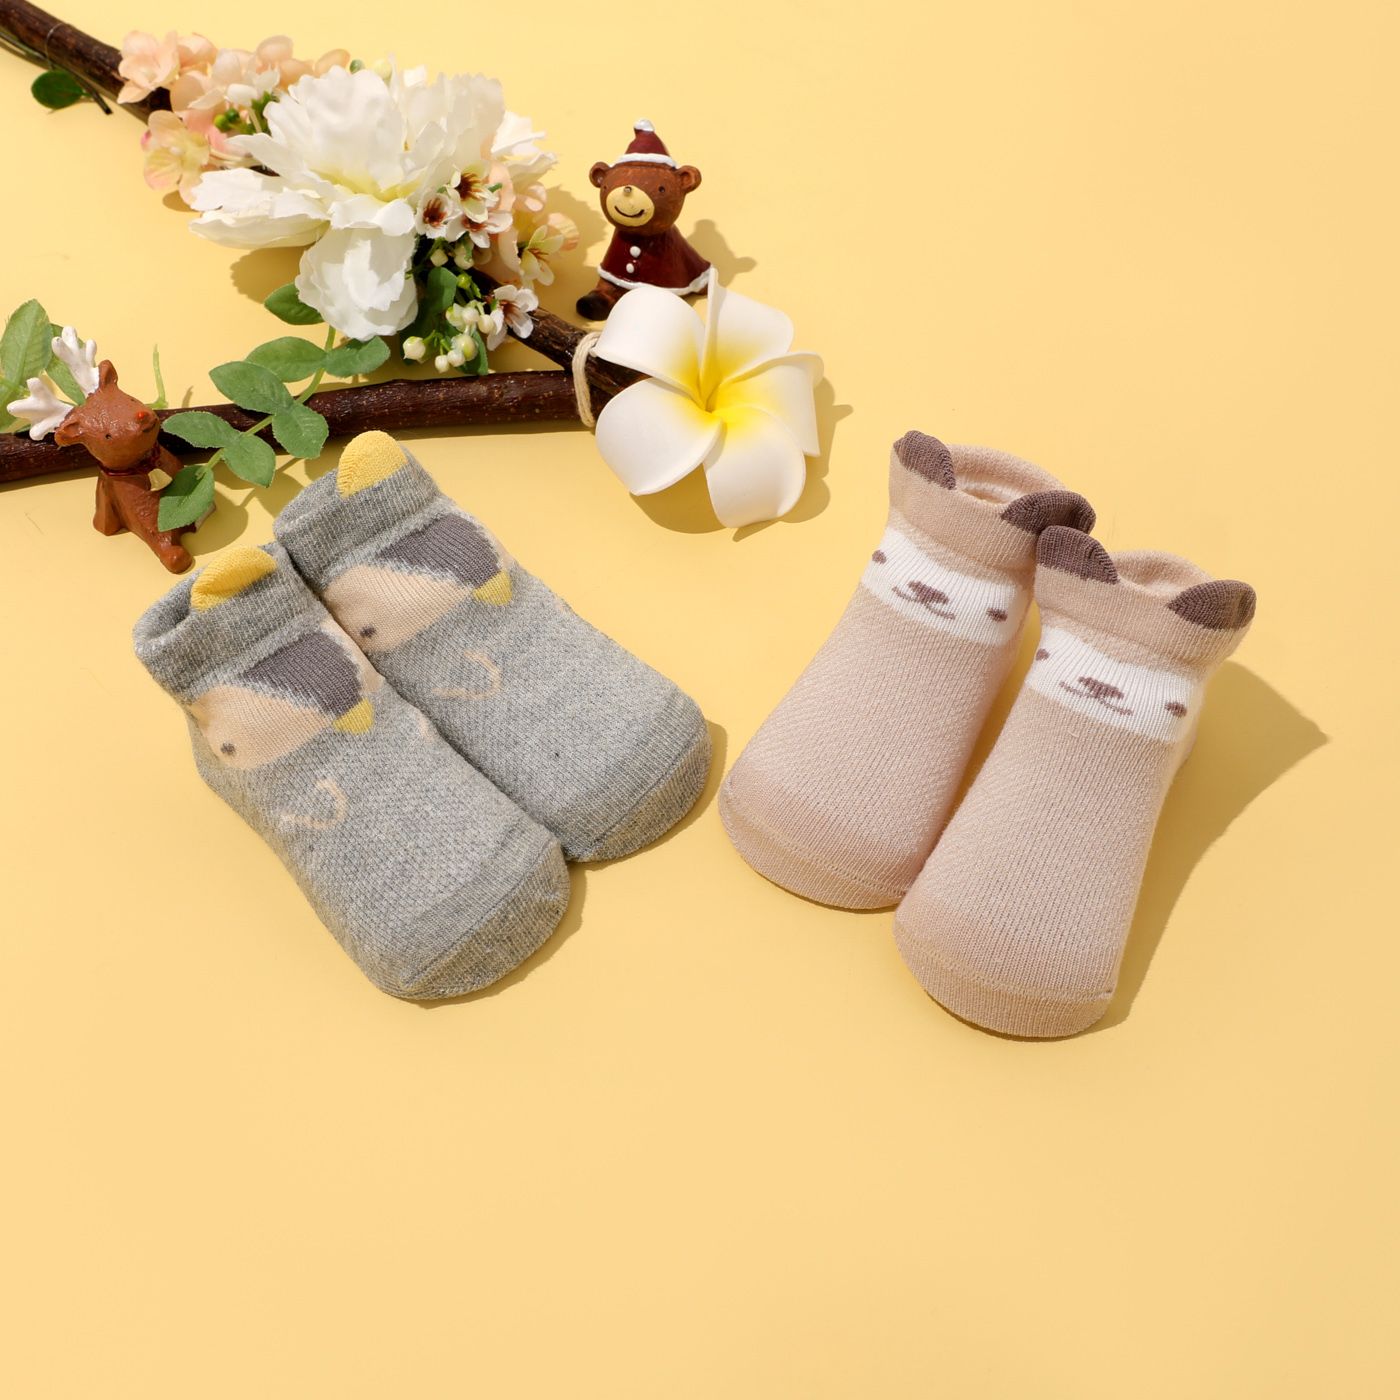 2-pack Baby Adorable Cartoon Socks